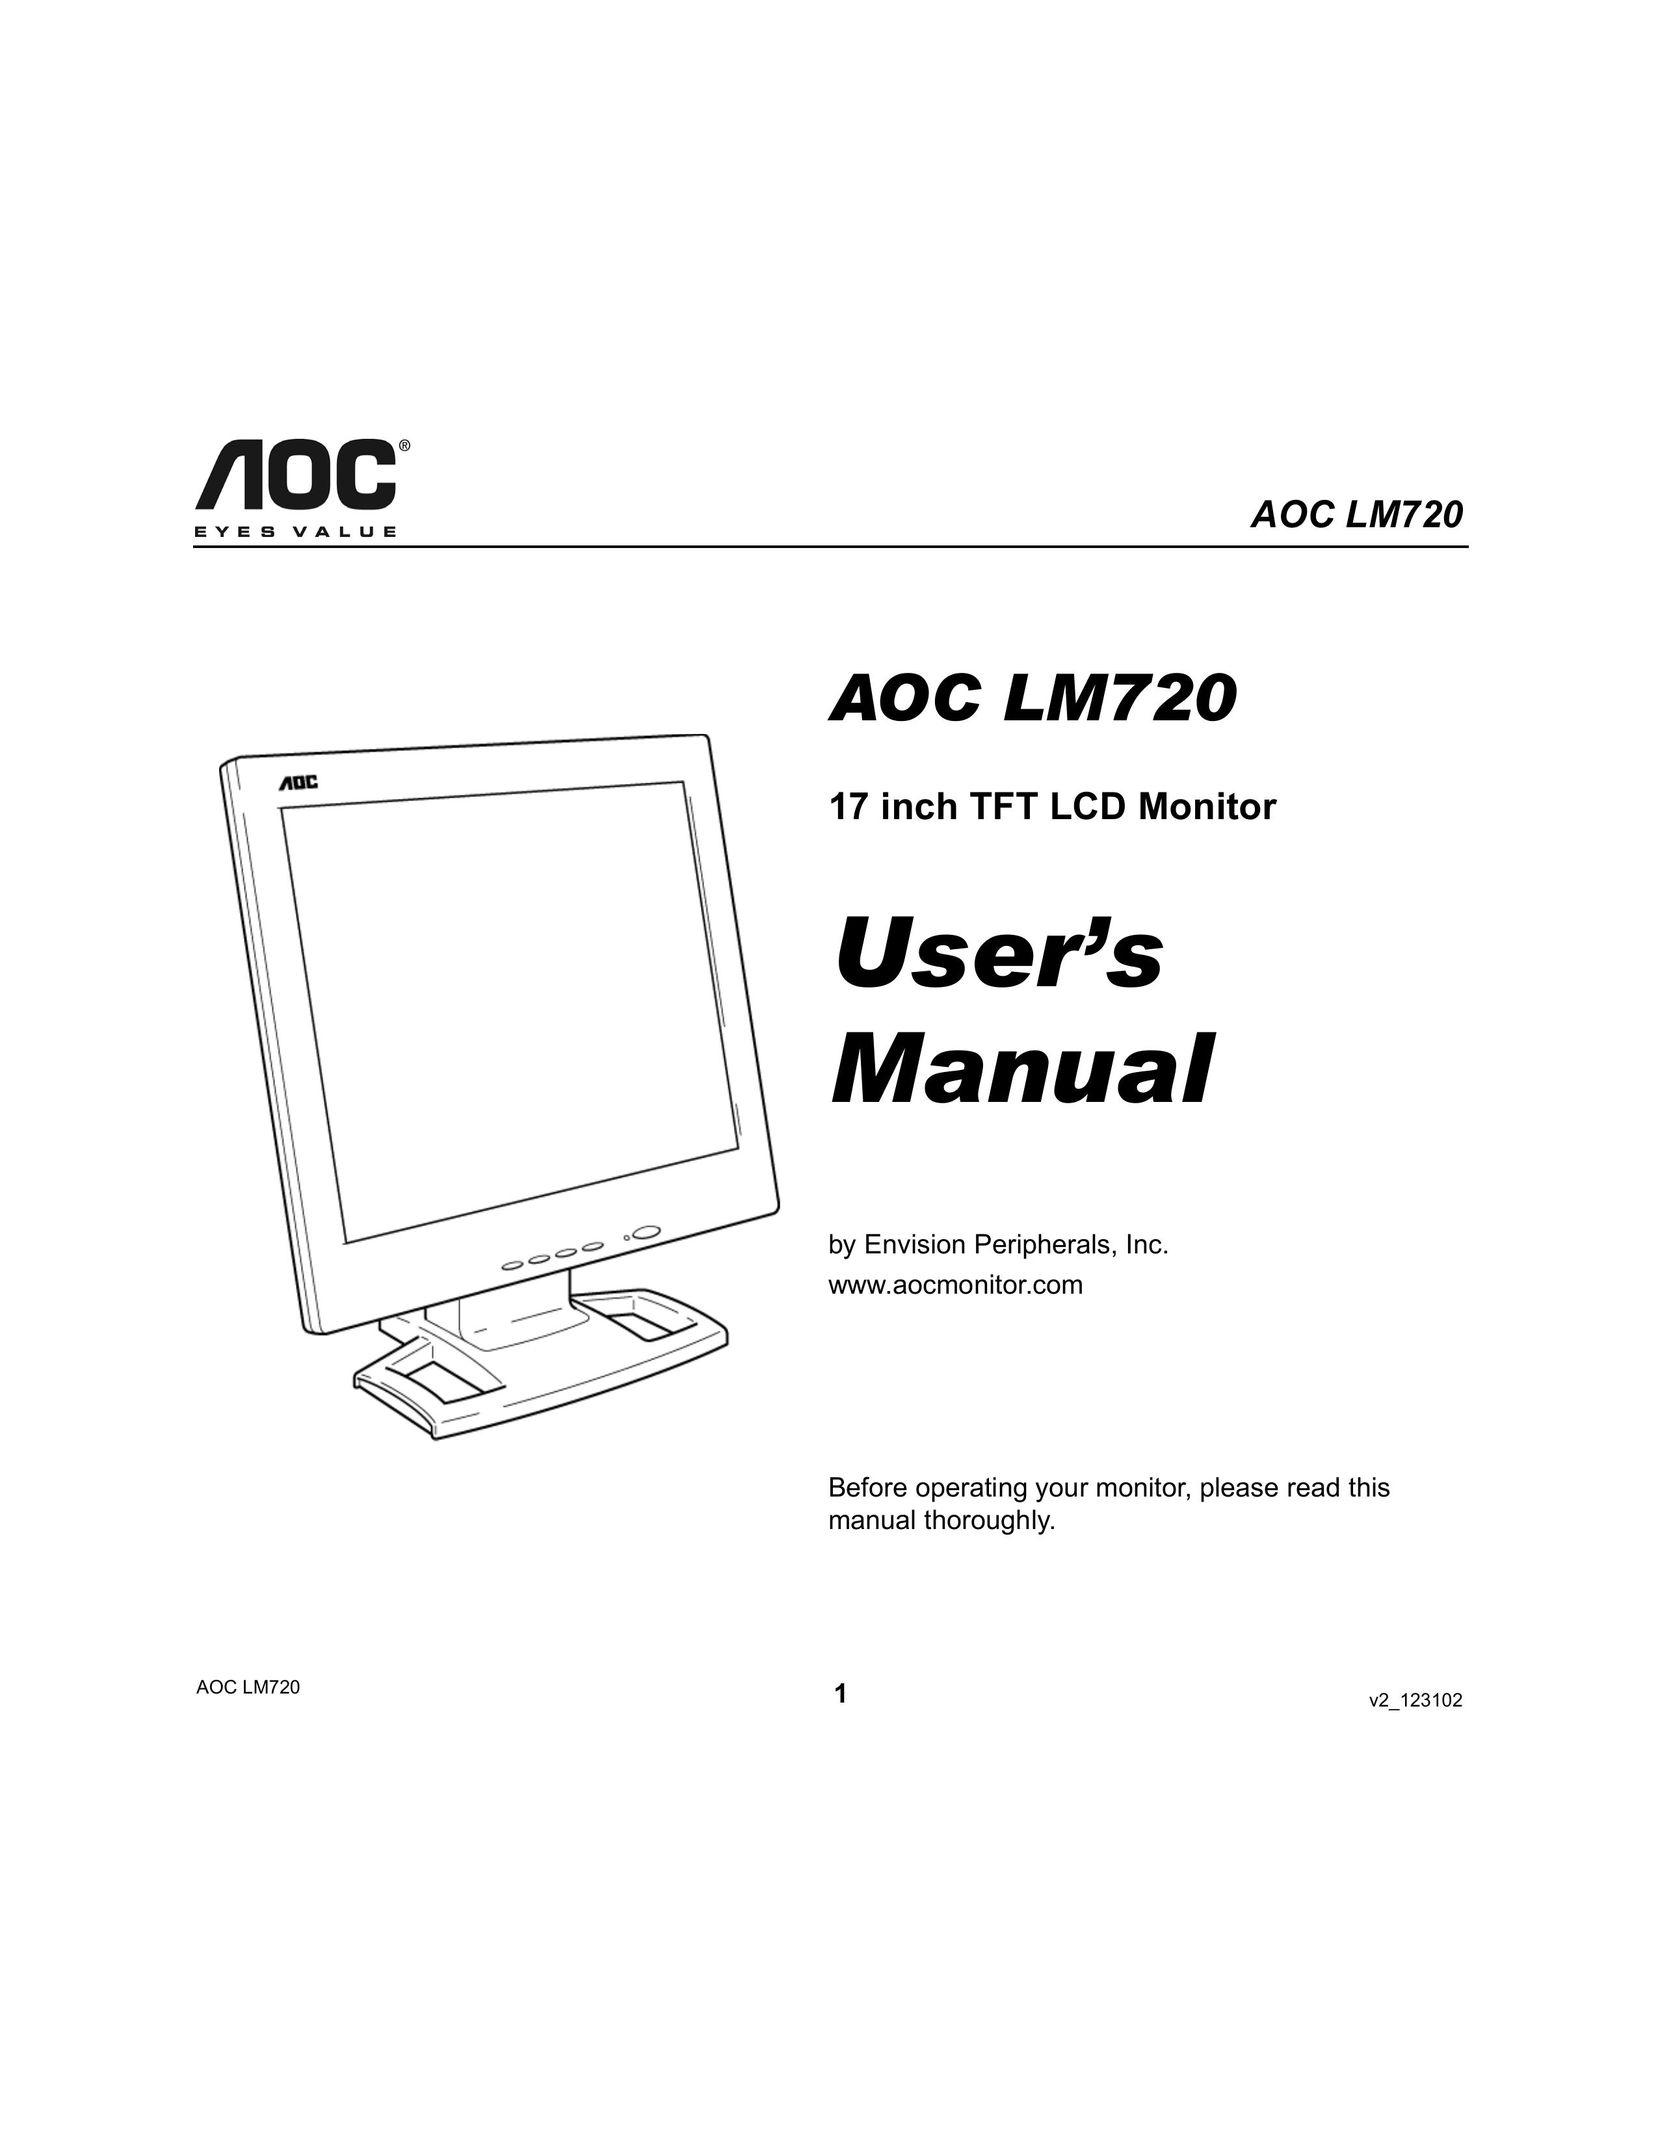 Ergotron AOC LM720 Computer Monitor User Manual